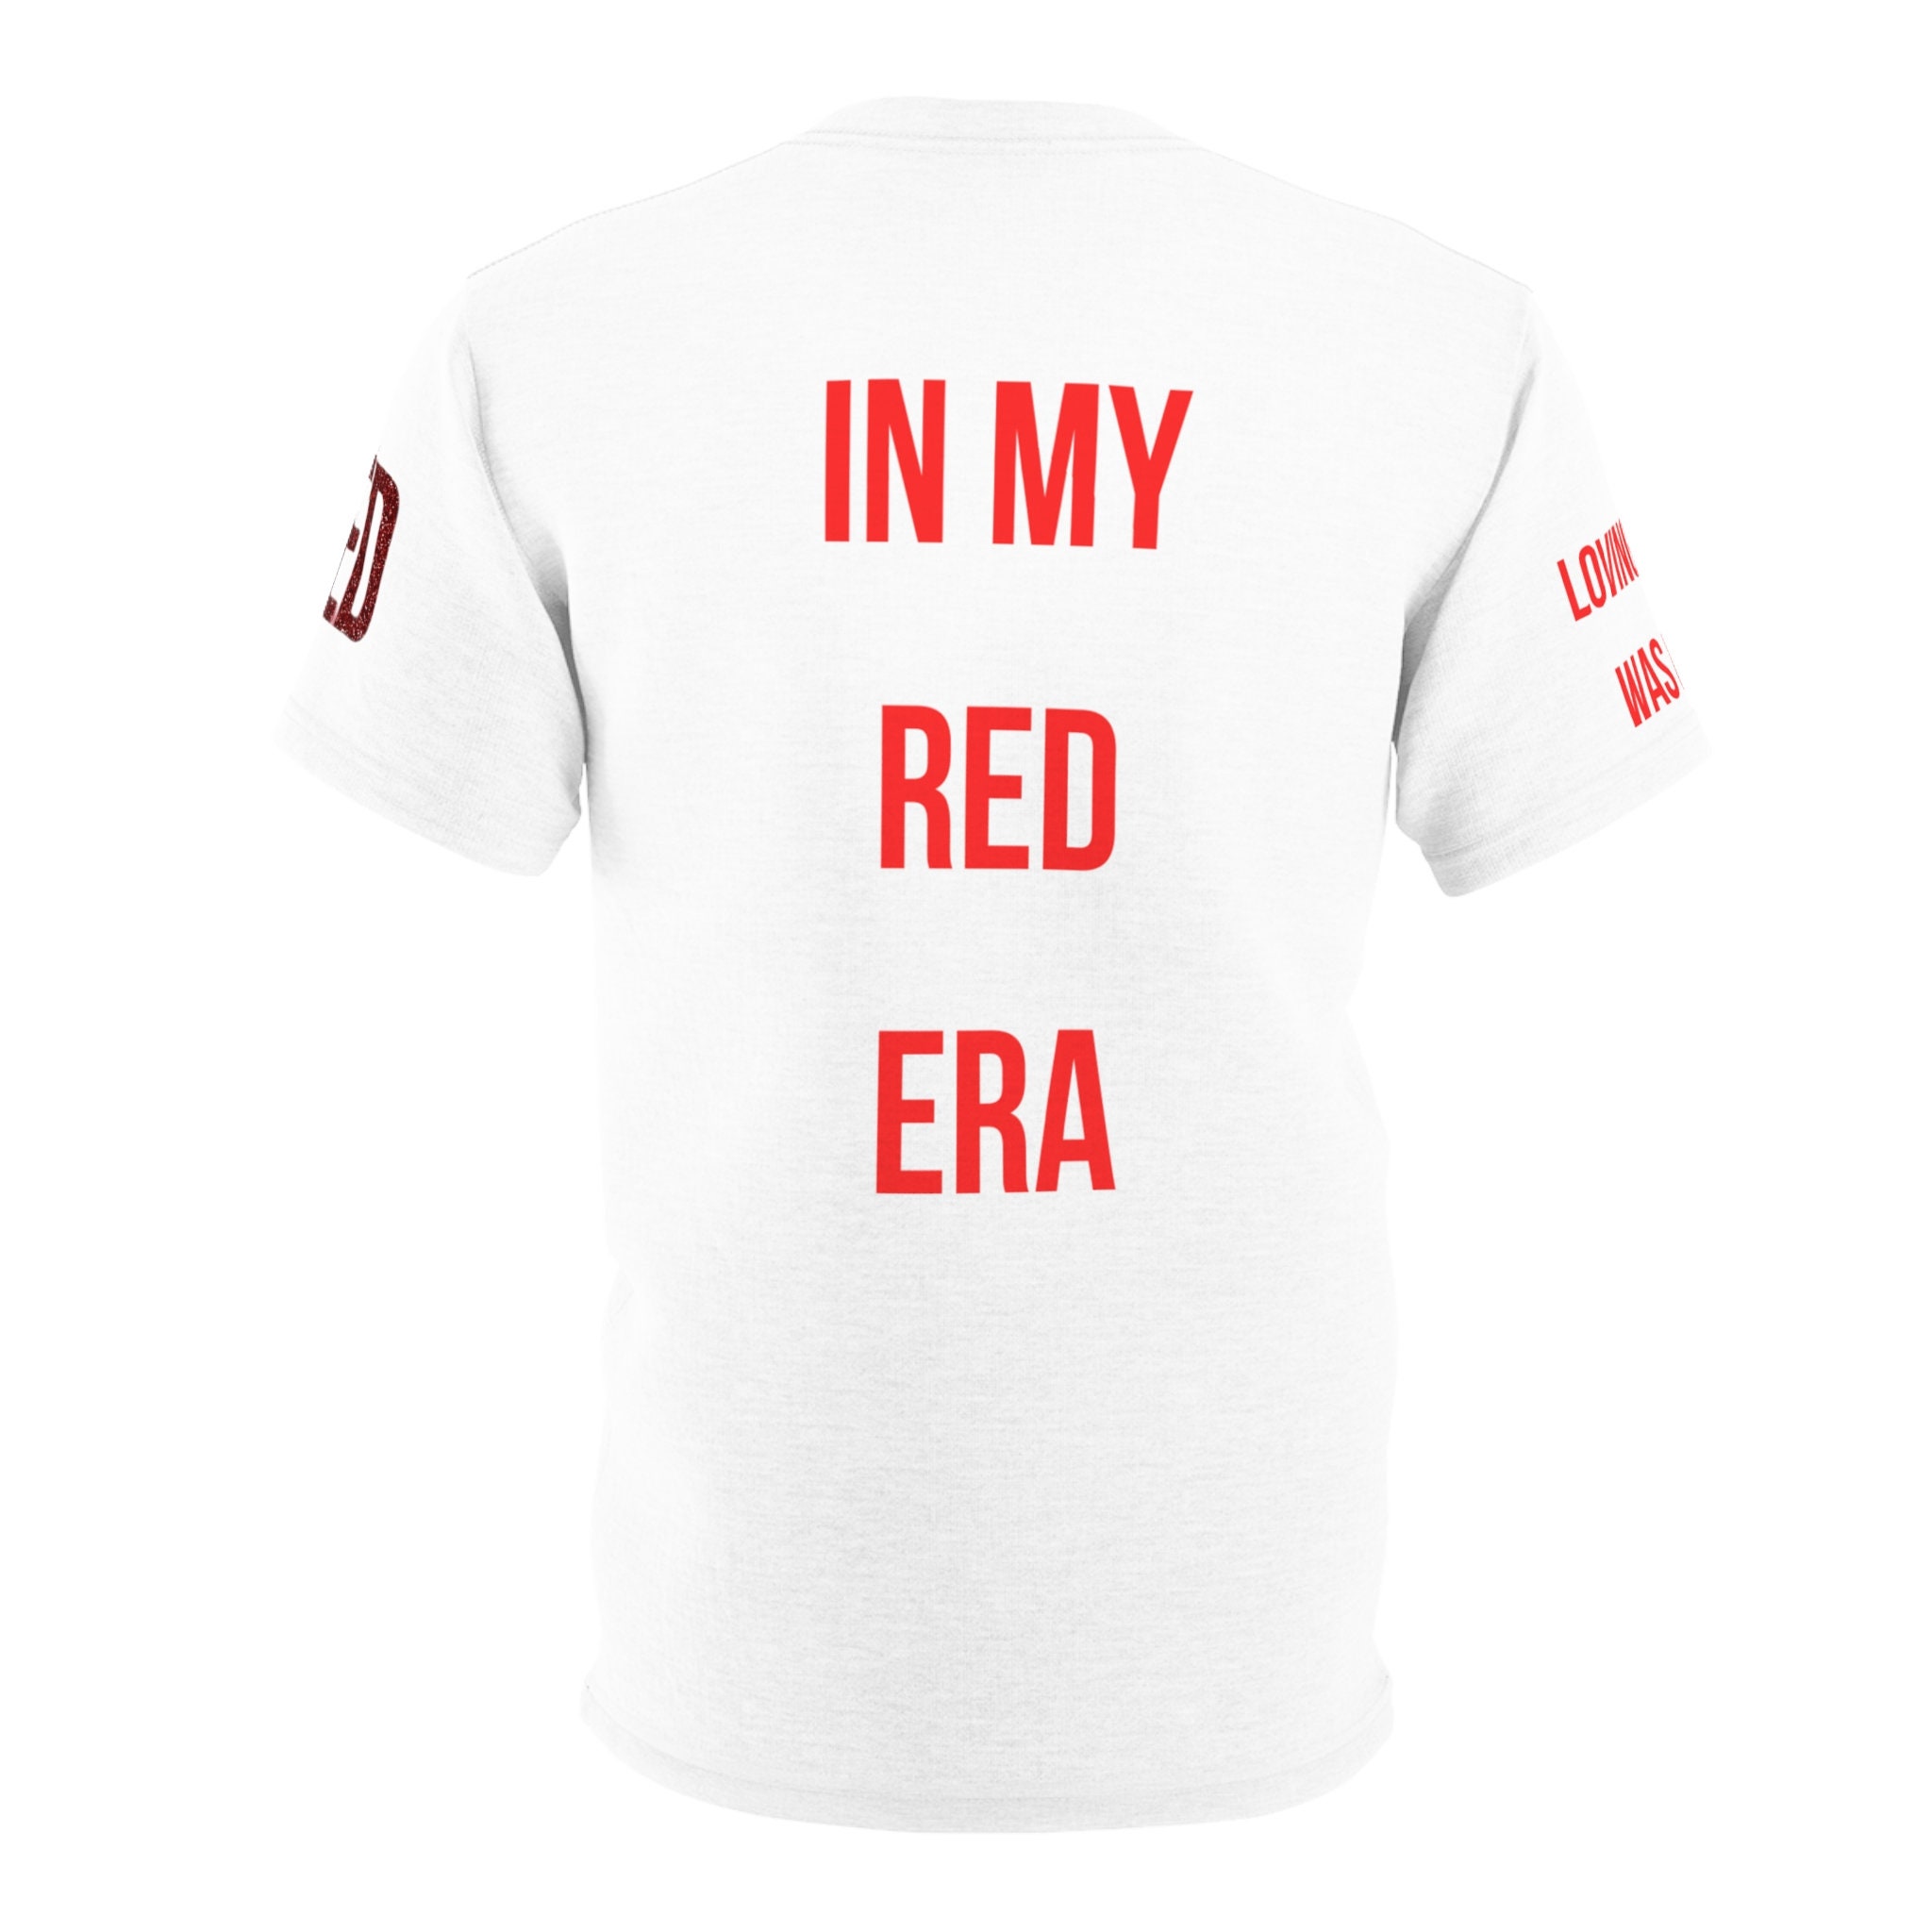 Taylor Red Era Shirt, Eras Tour Red TV Concert Tshirt, Taylor Merch